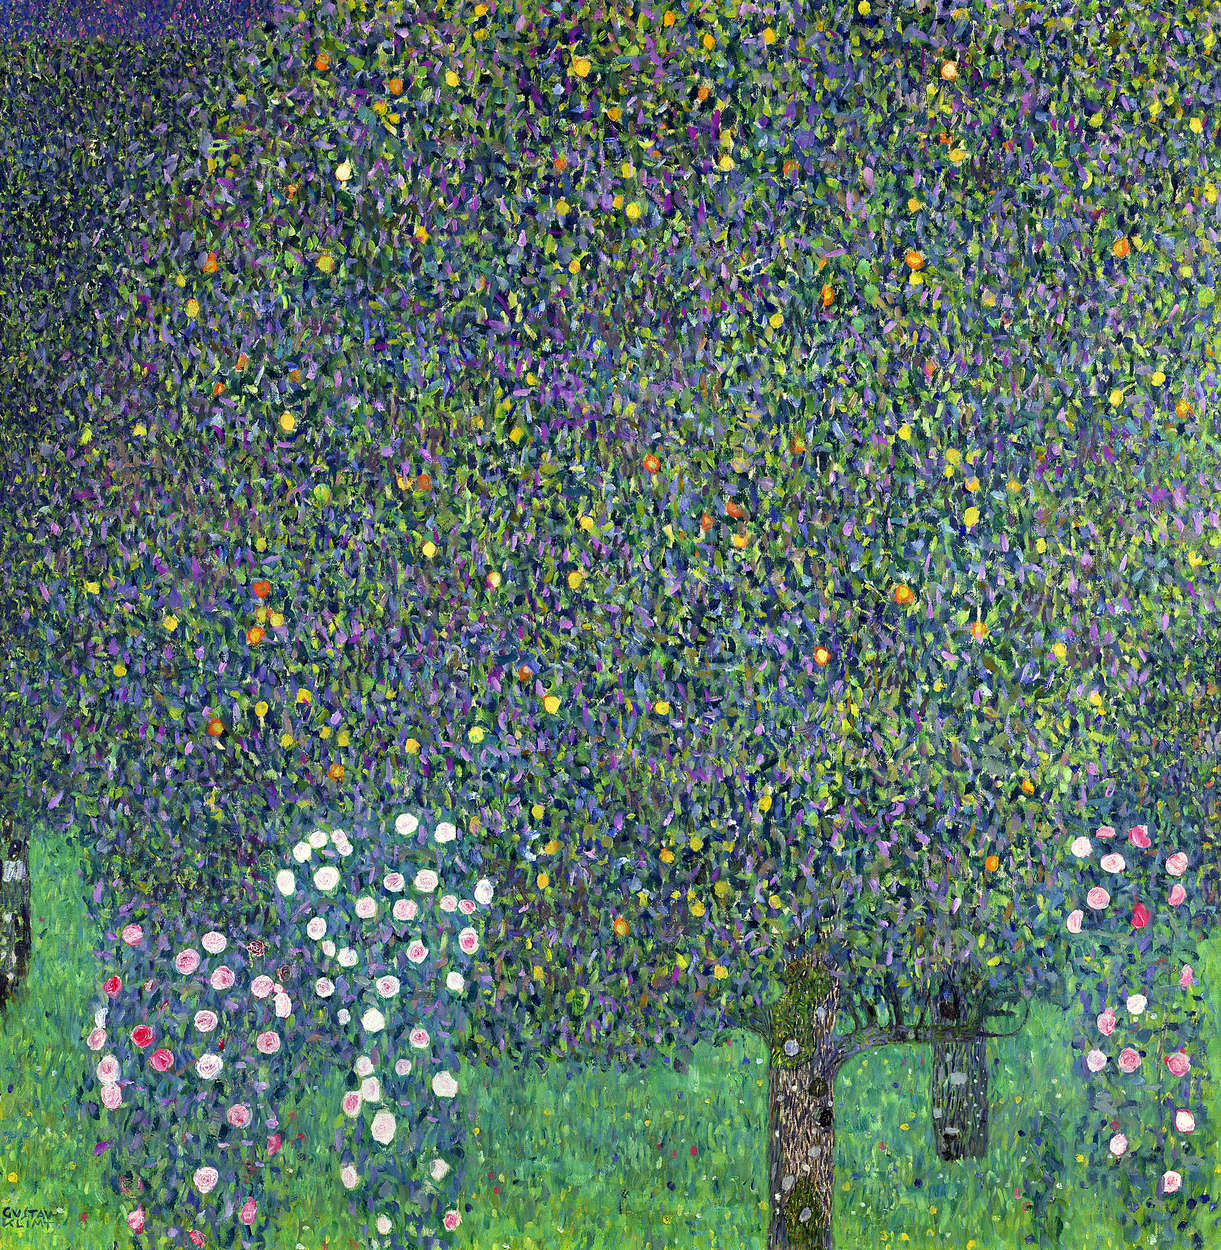             Mural "Rosas bajo los árboles" de Gustav Klimt
        